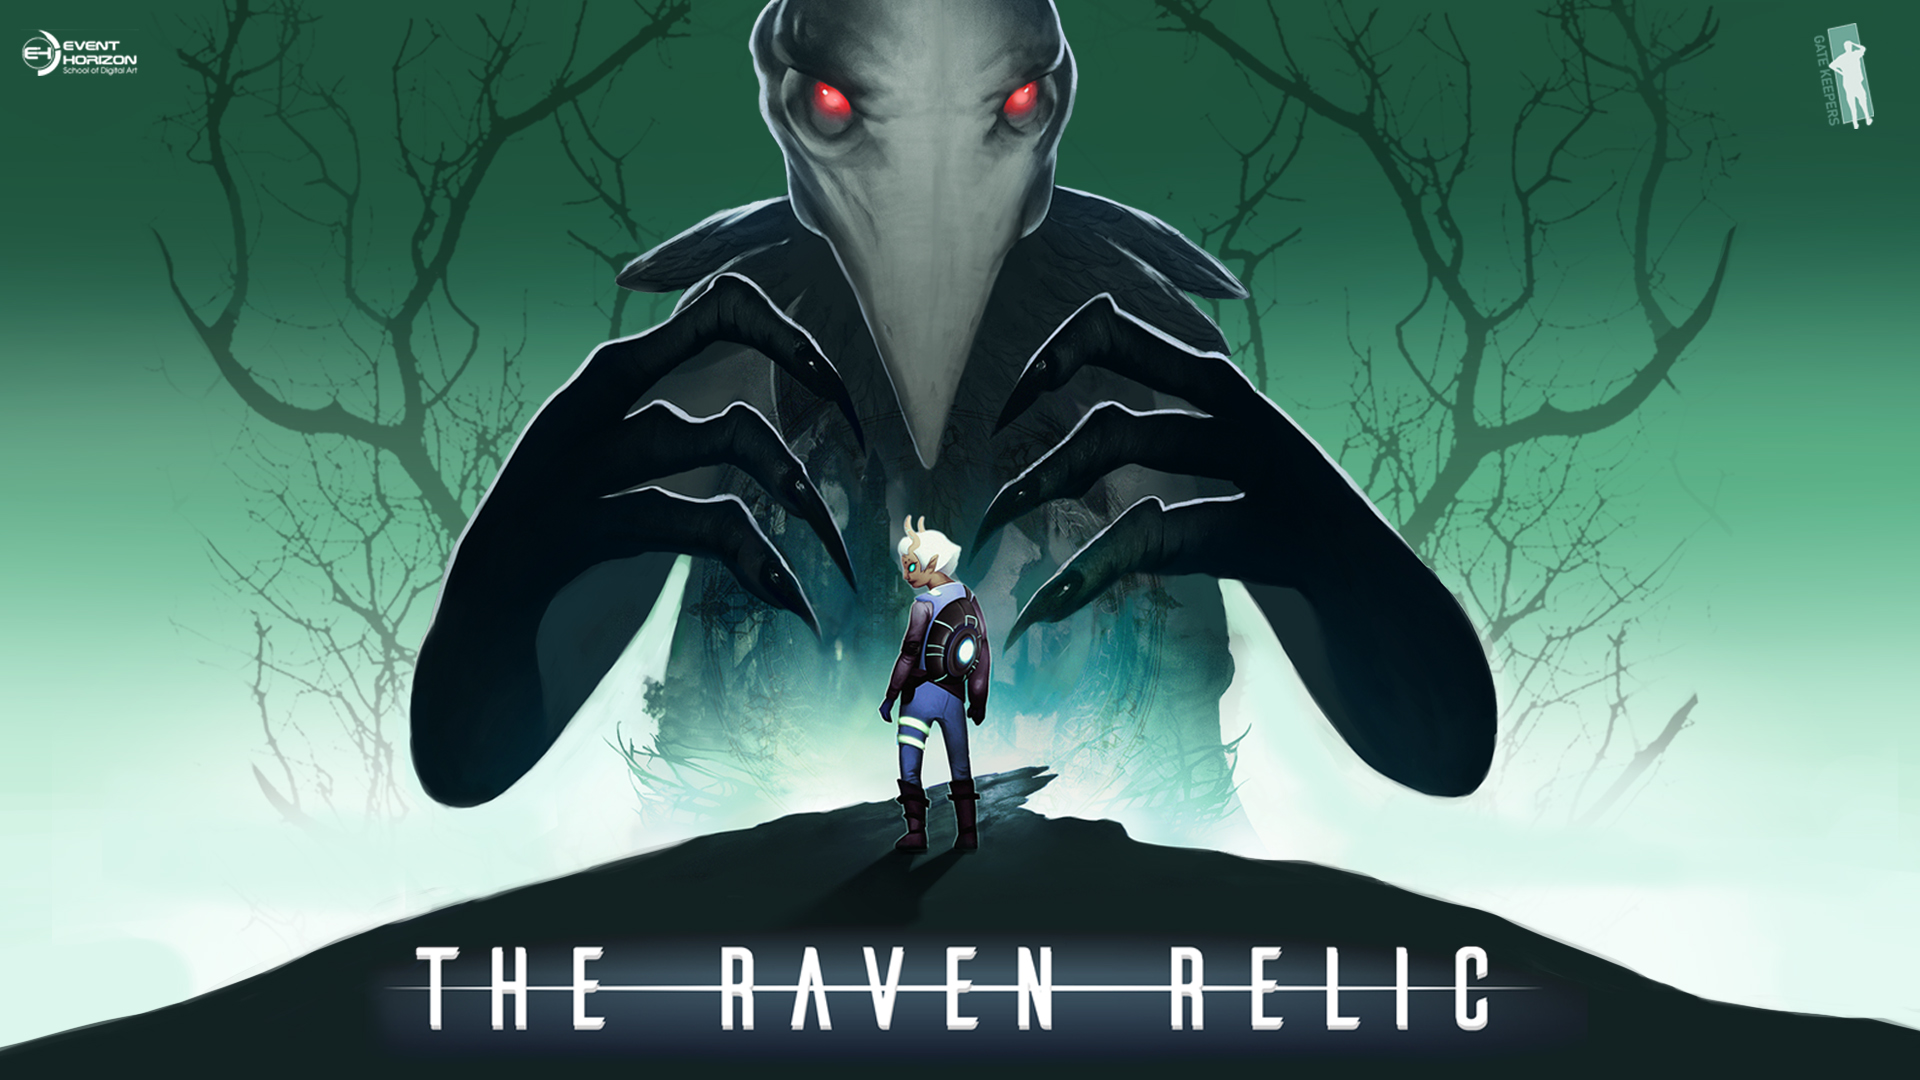 The Raven Relic